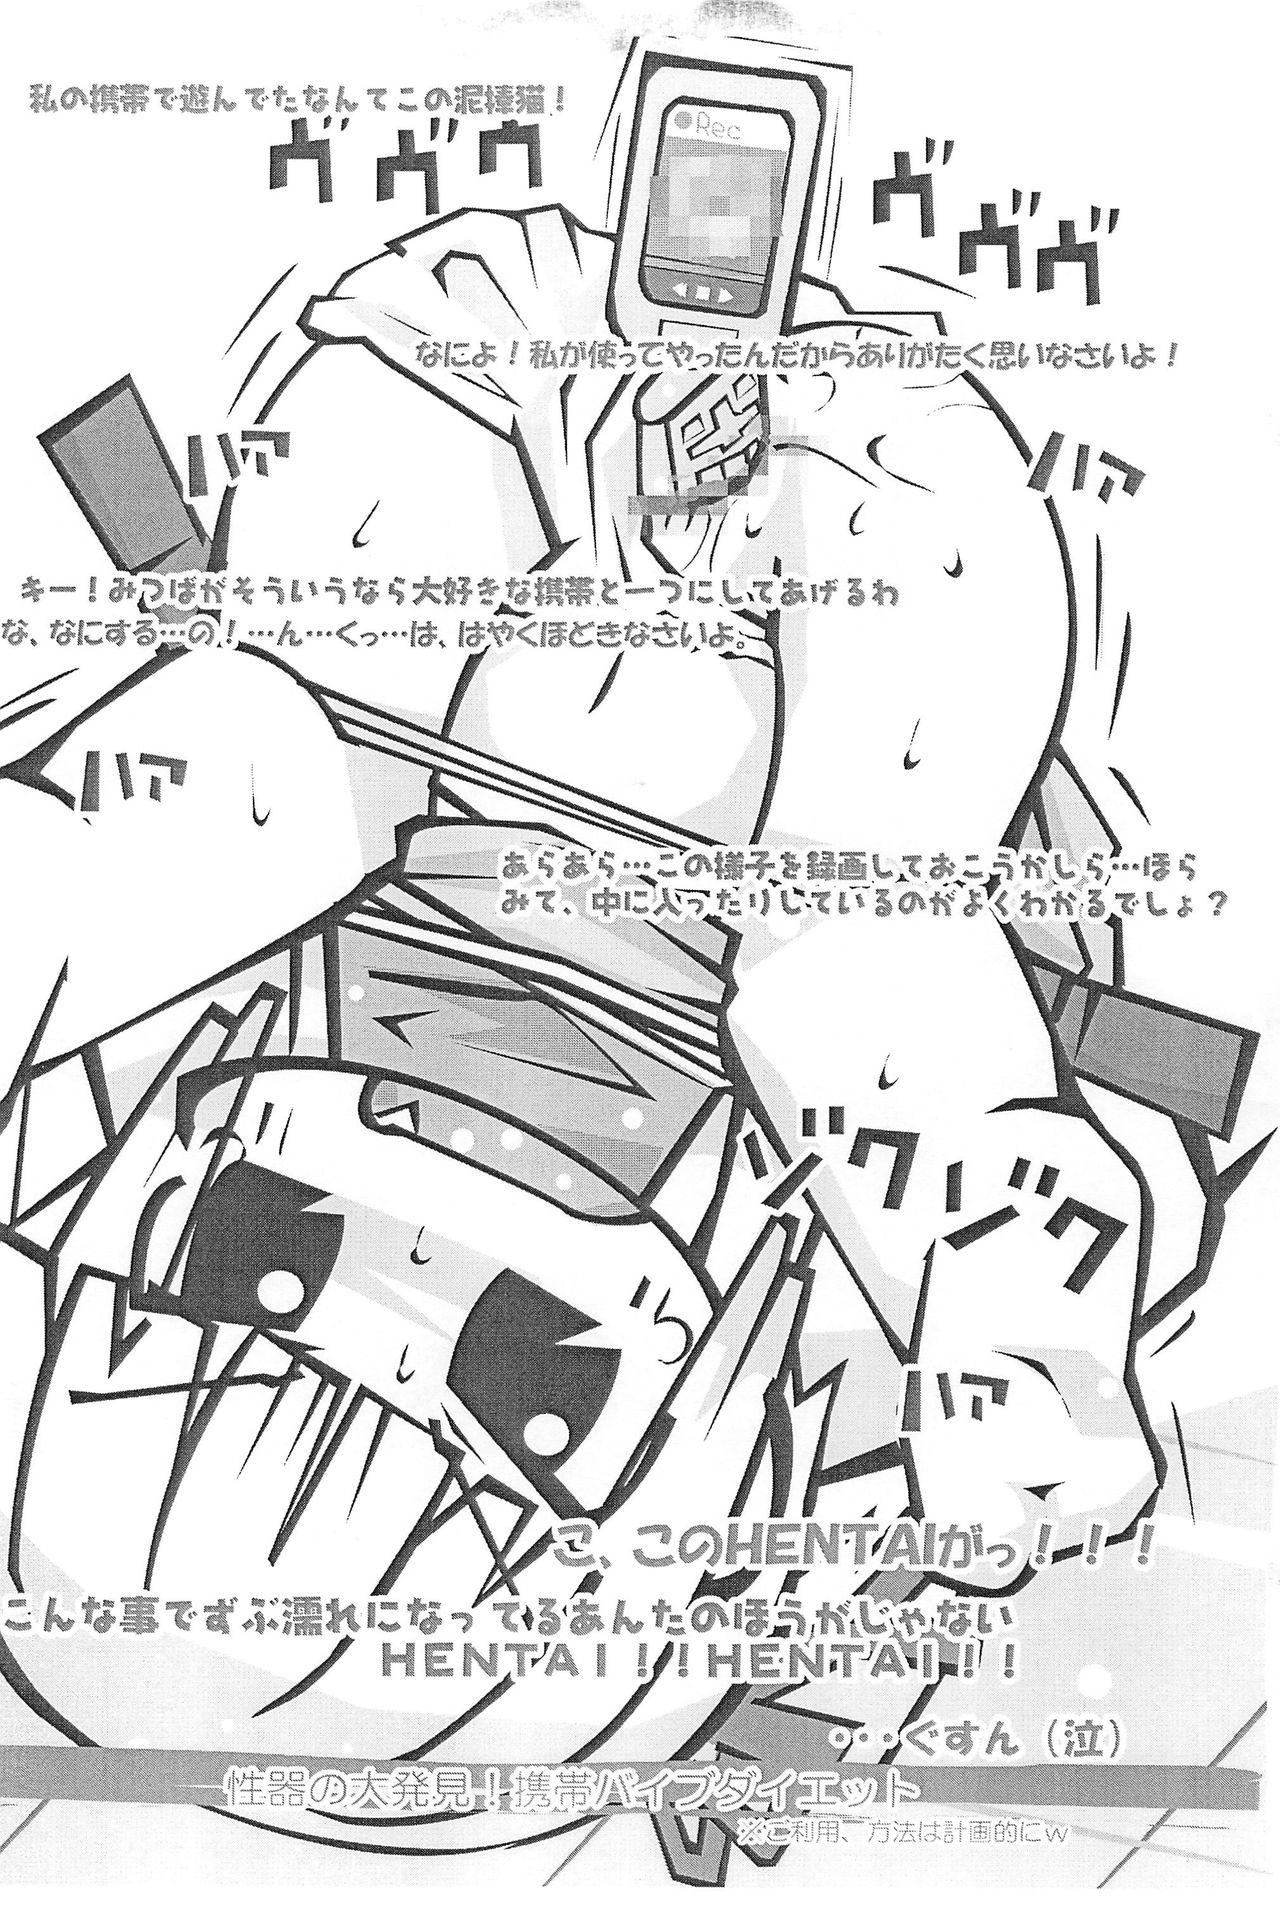 Family Taboo Honiki-Hentai 6 no 3 - Mitsudomoe Dick Sucking - Page 9